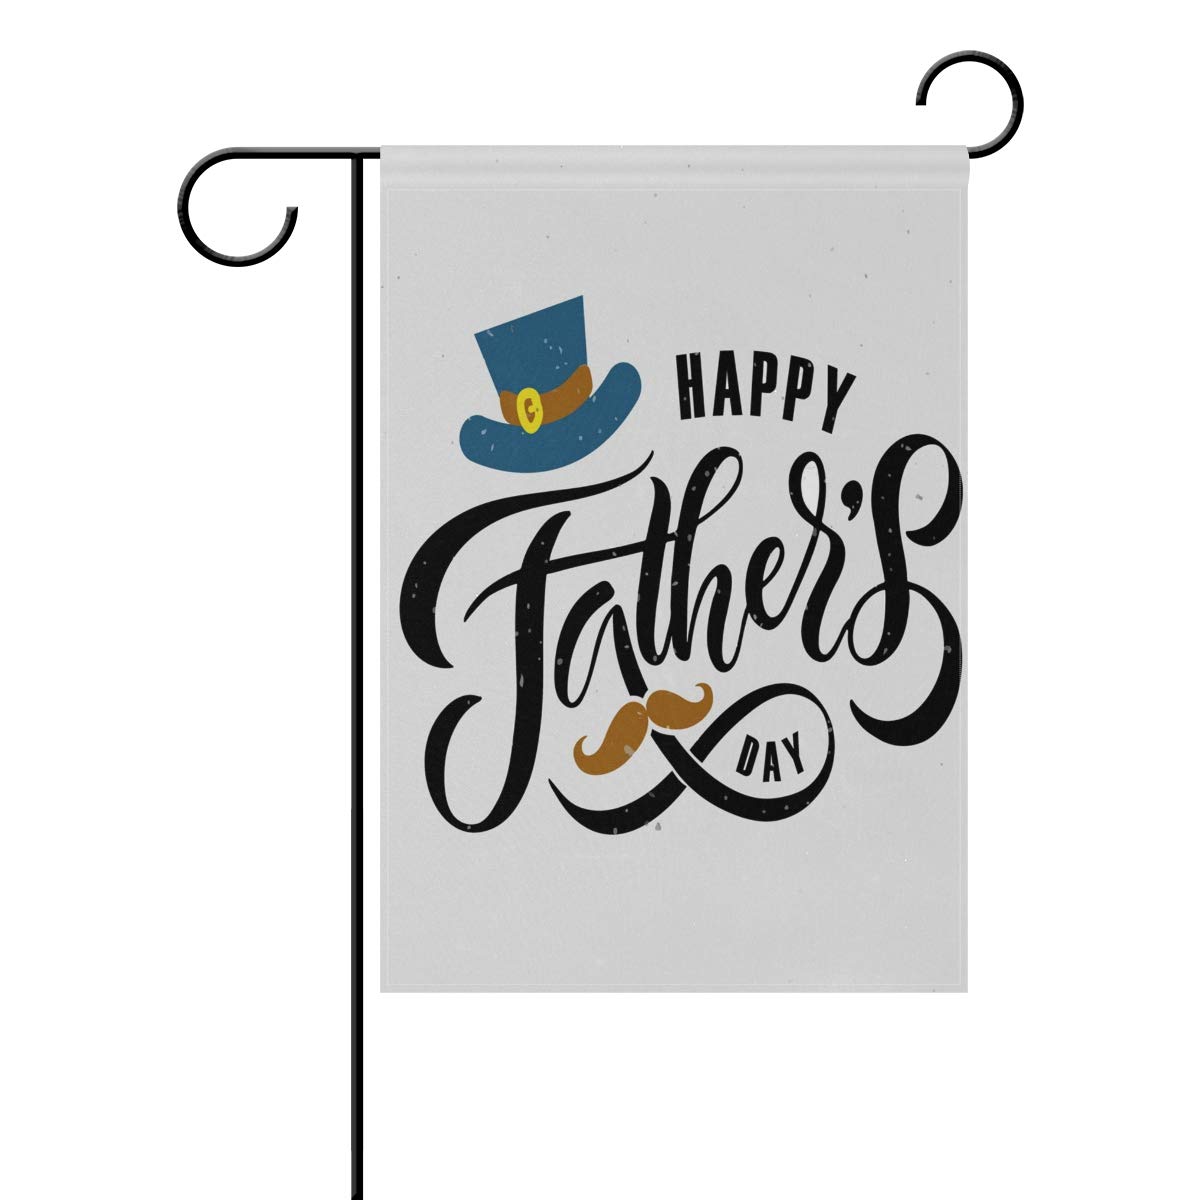 Friend Happy Fathers Day - HD Wallpaper 